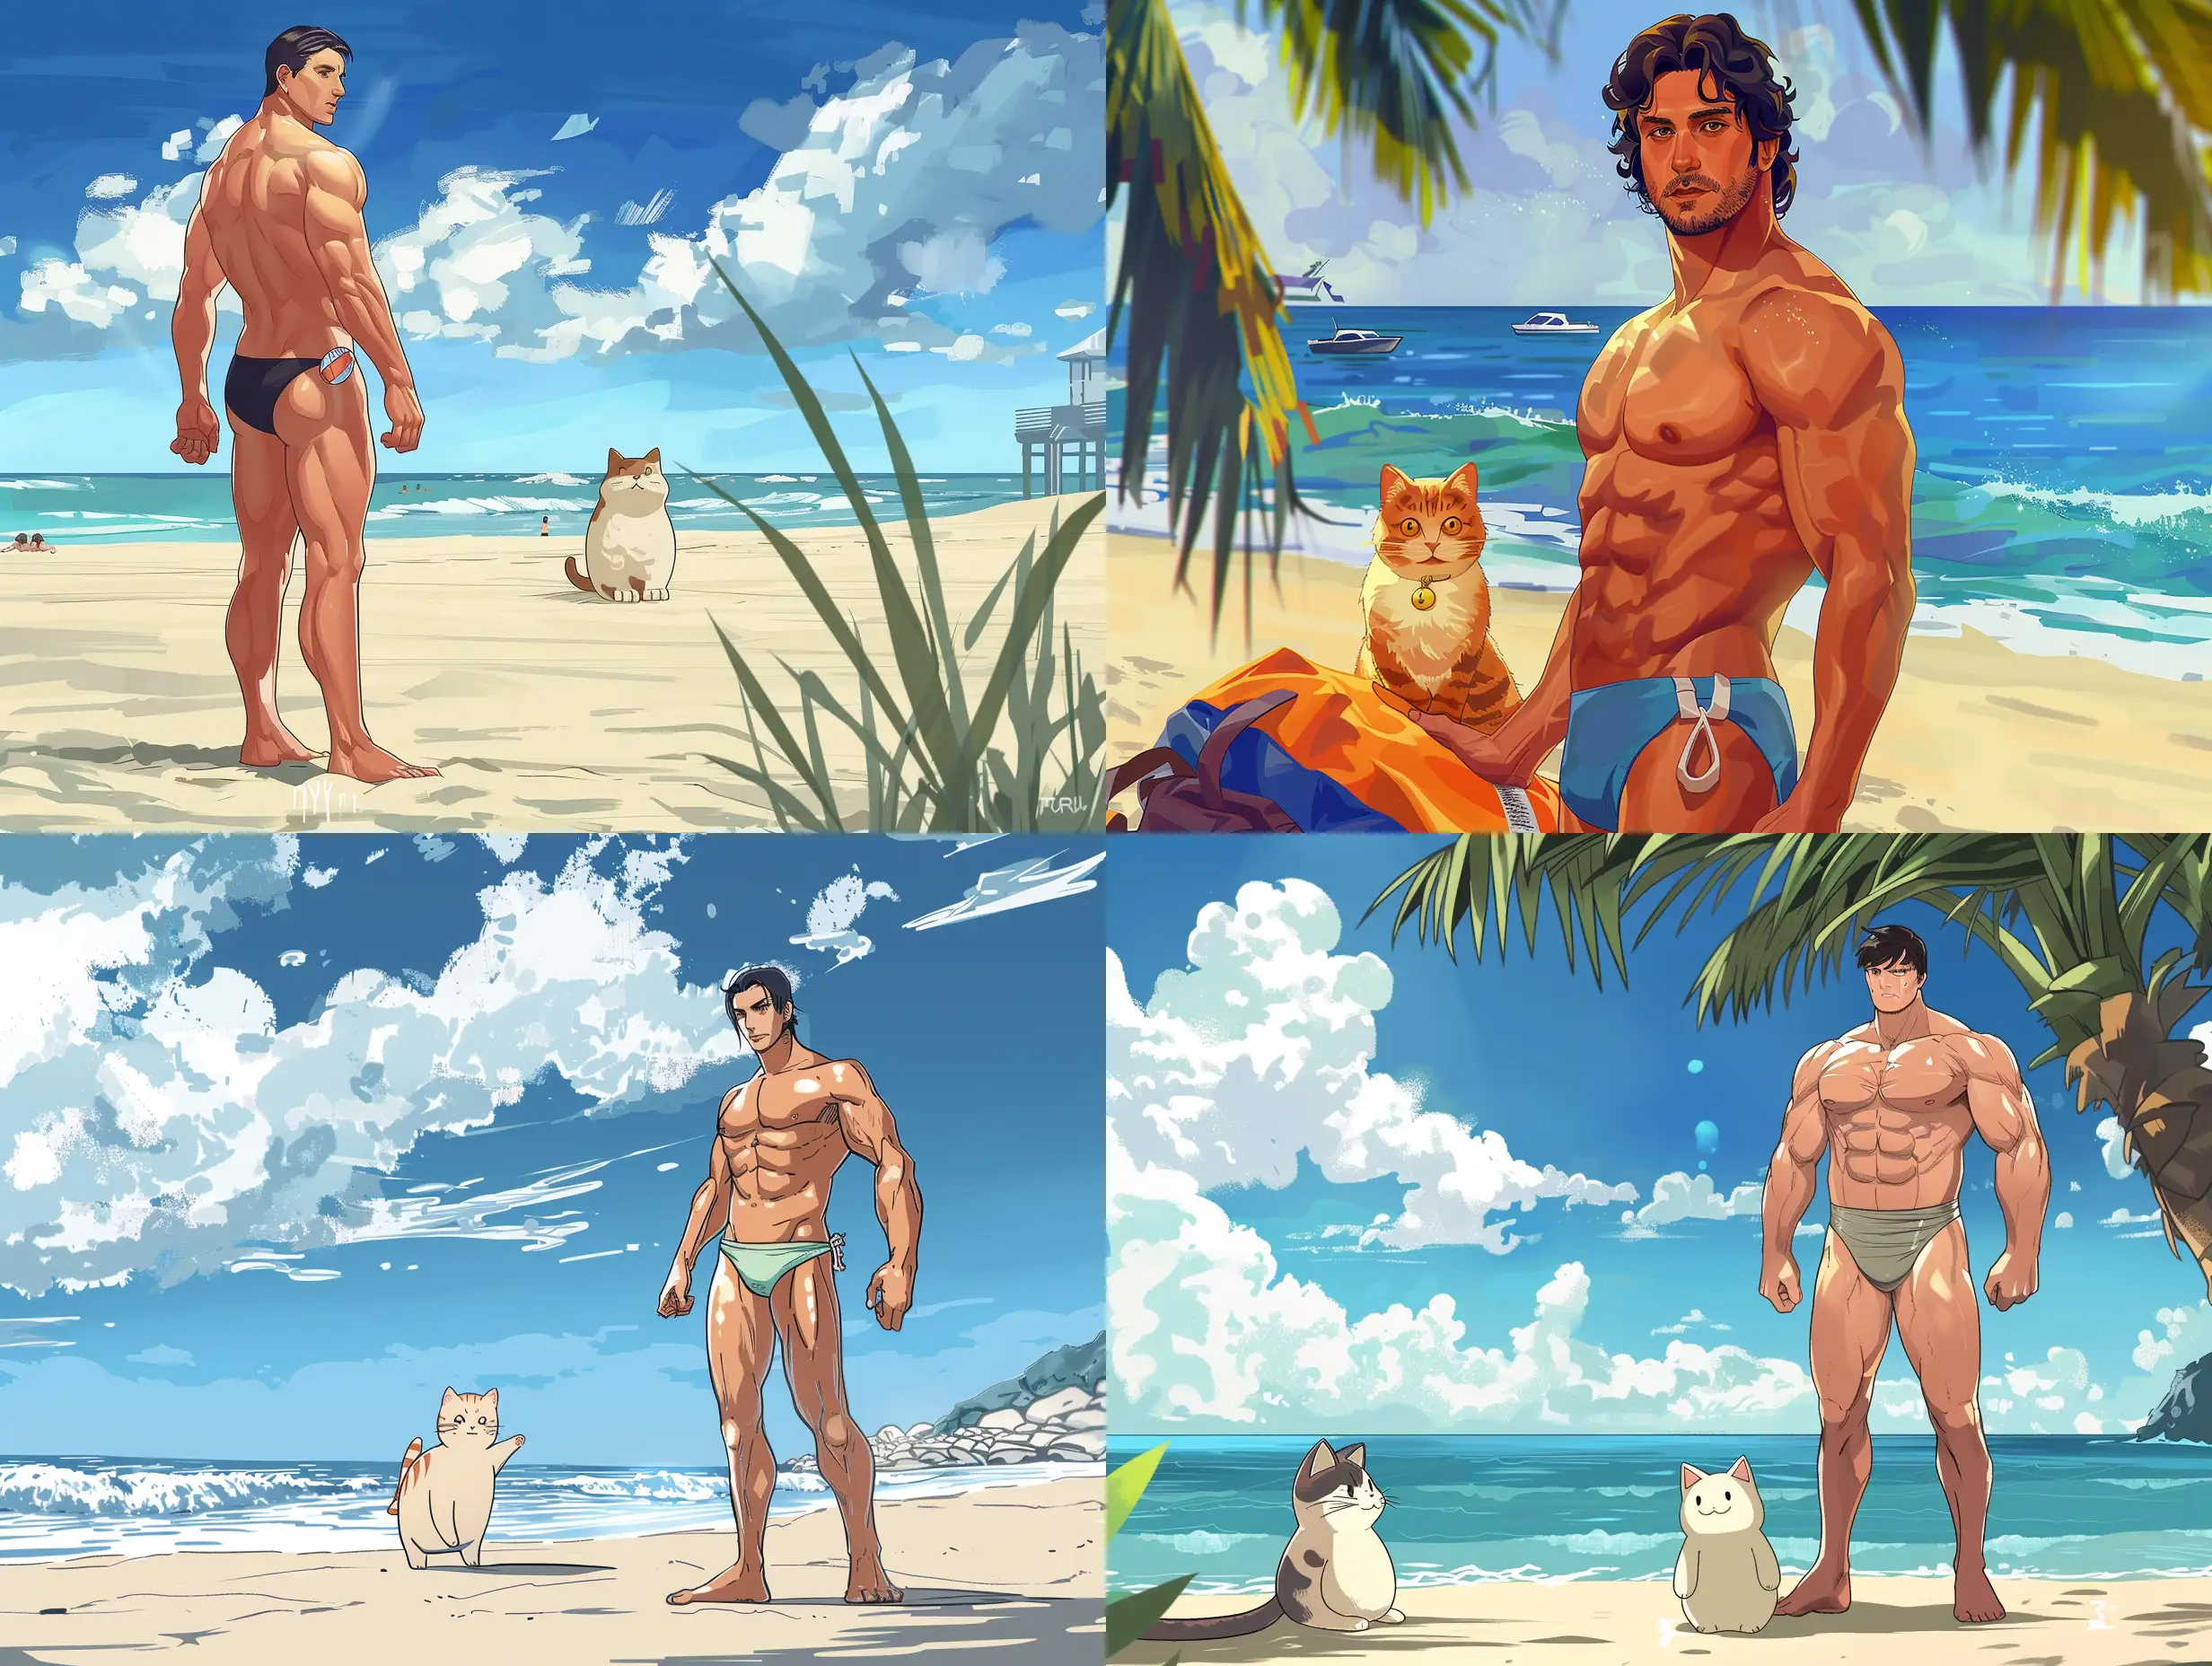 Anime-Style-Man-in-Speedo-with-Nyan-Cat-on-Beach